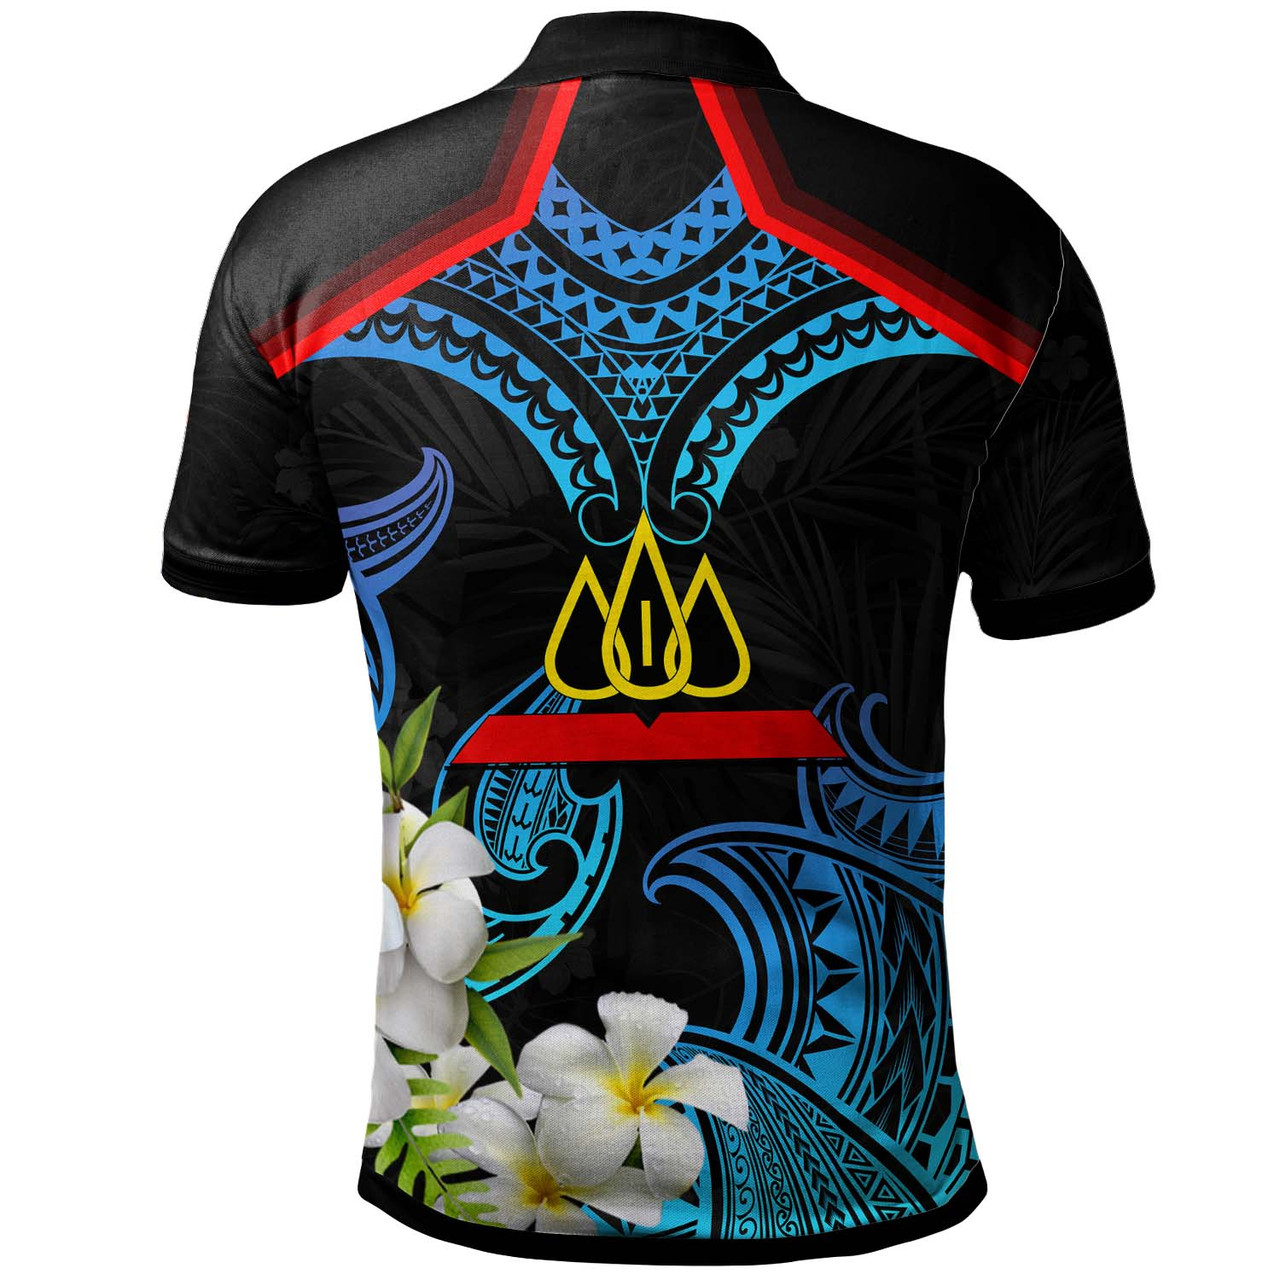 Tonga Polynesian Polo Shirt - Lavengamalie College with Polynesian Patterns and Plumeria Flower Polo Shirt